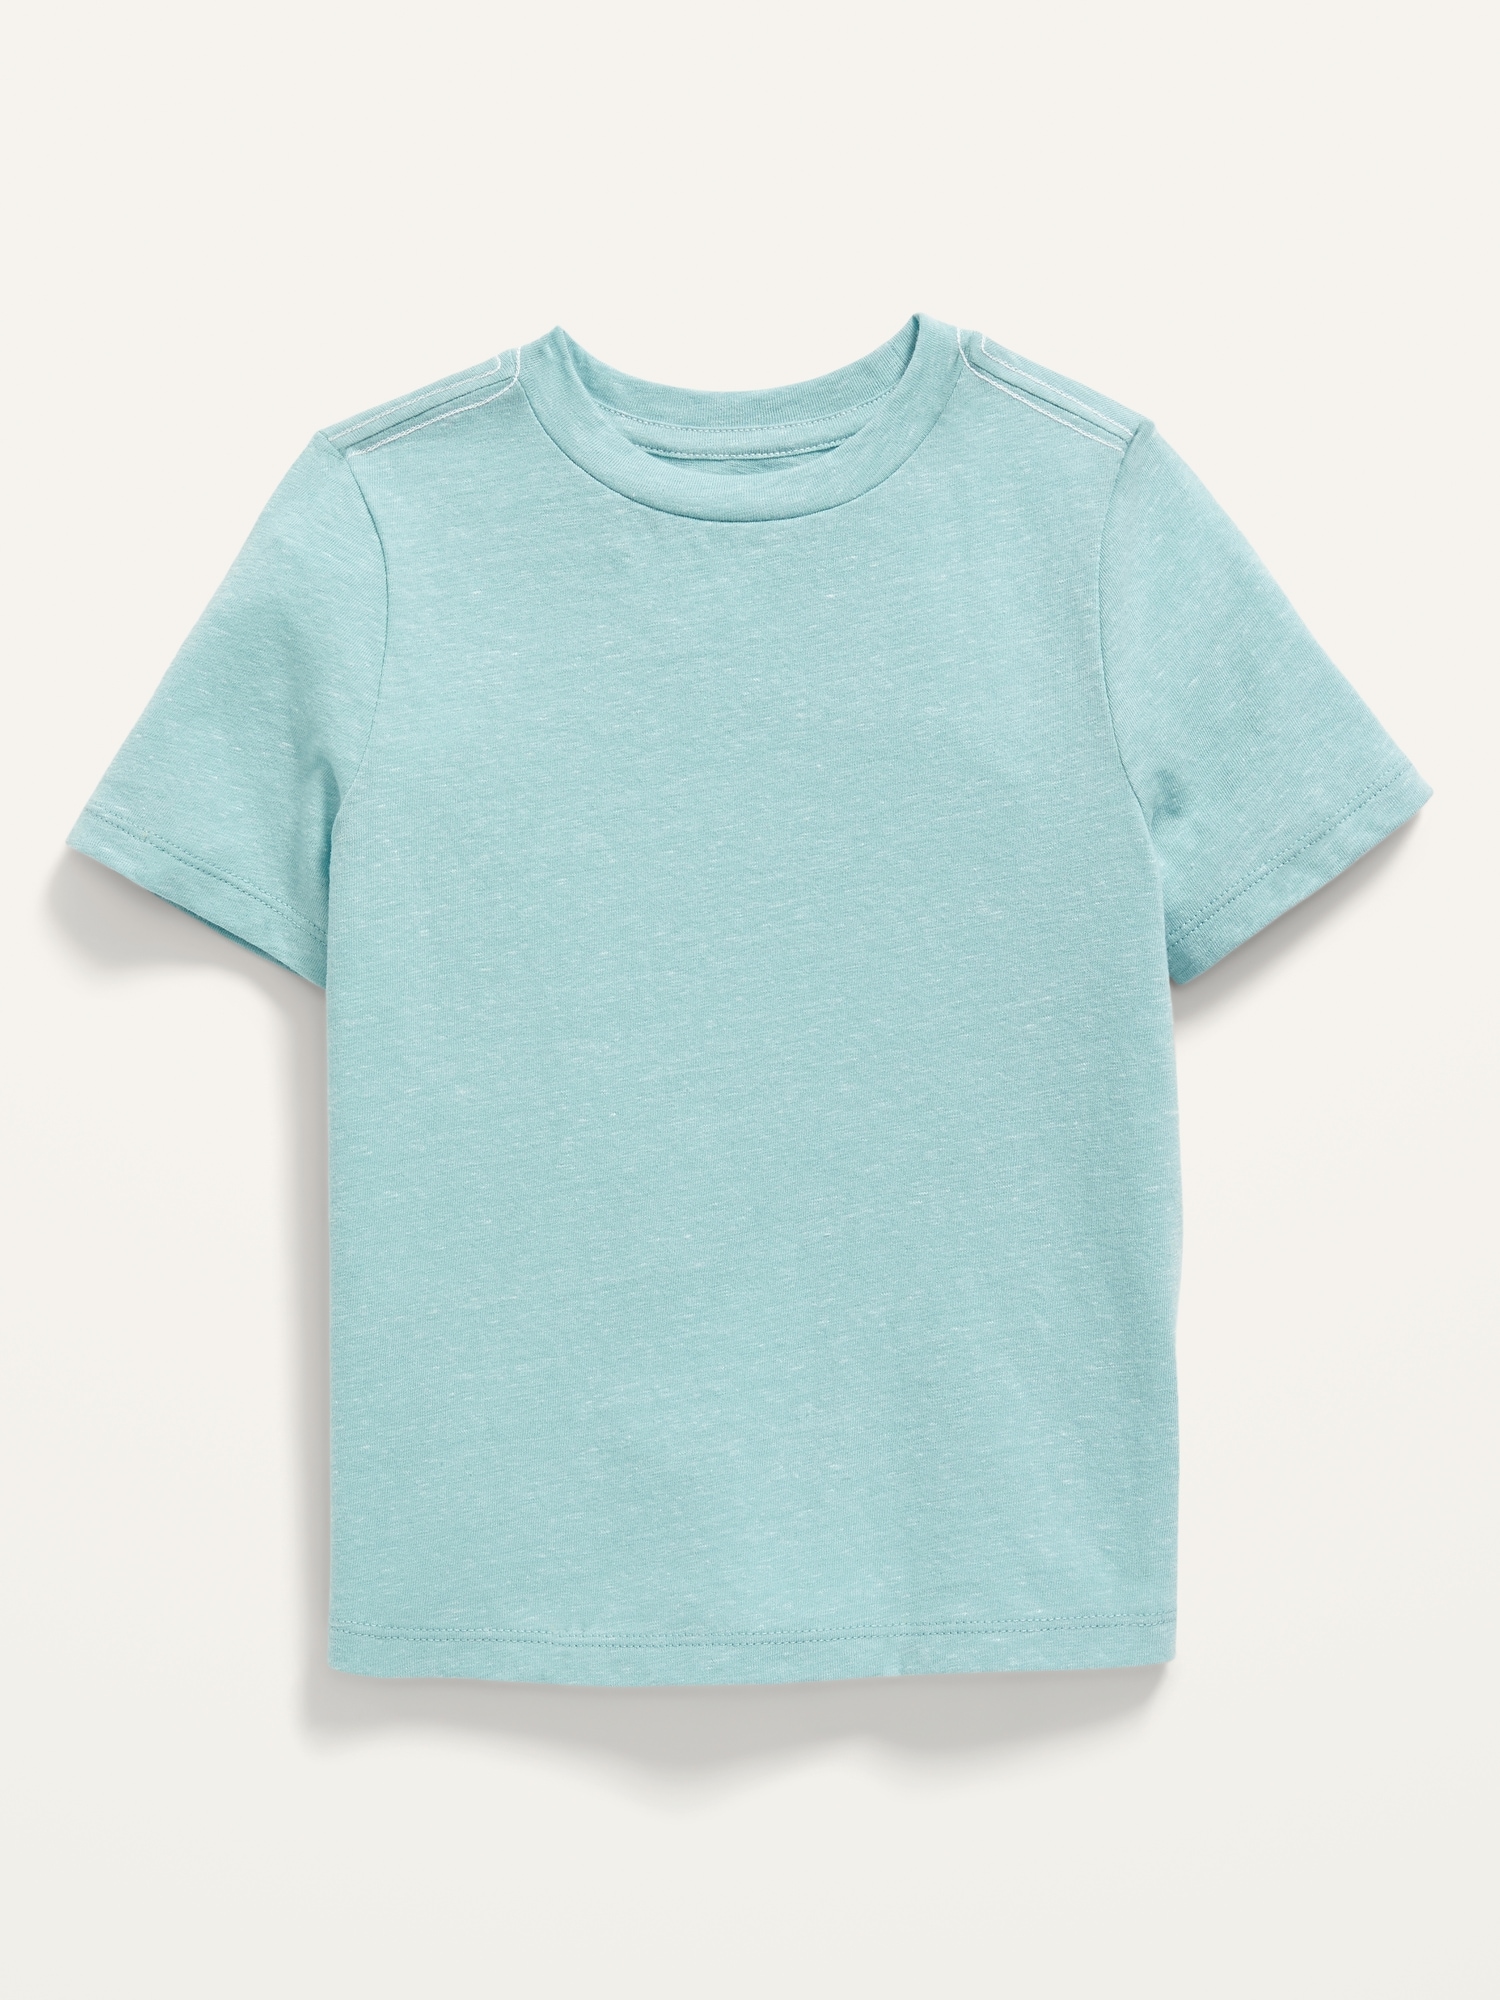 Unisex Short-Sleeve Slub-Knit Tee for Toddler